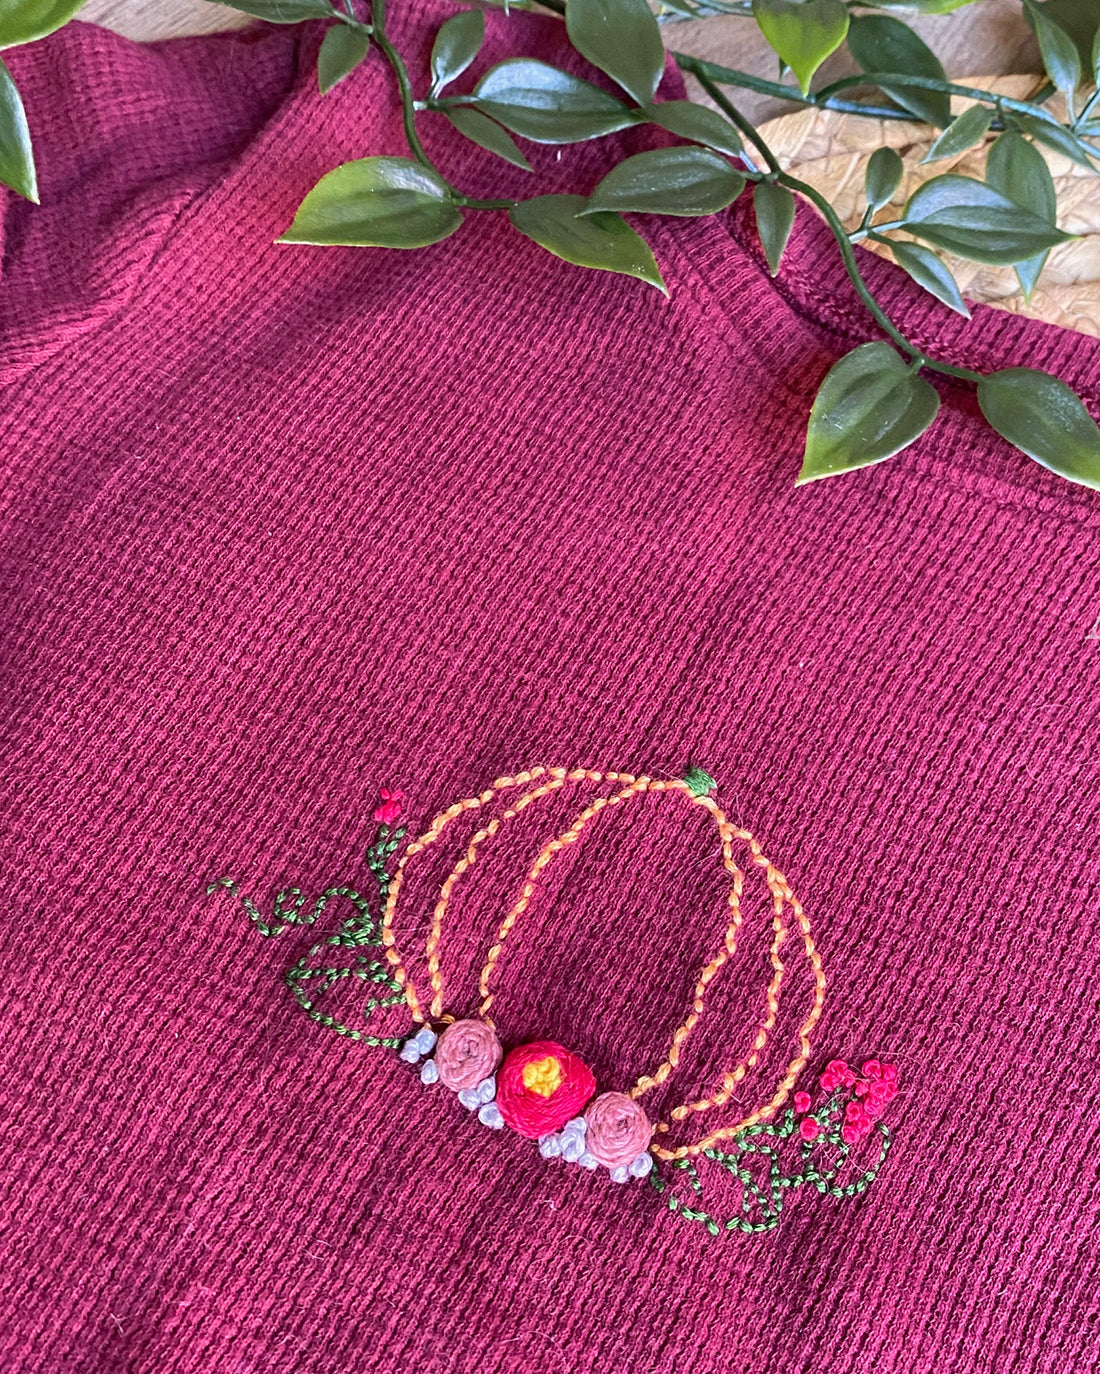 Pumpkin Patch Embroidery Pattern | Sunflower Seams Pattern Company | Digital PDF Embroidery Pattern